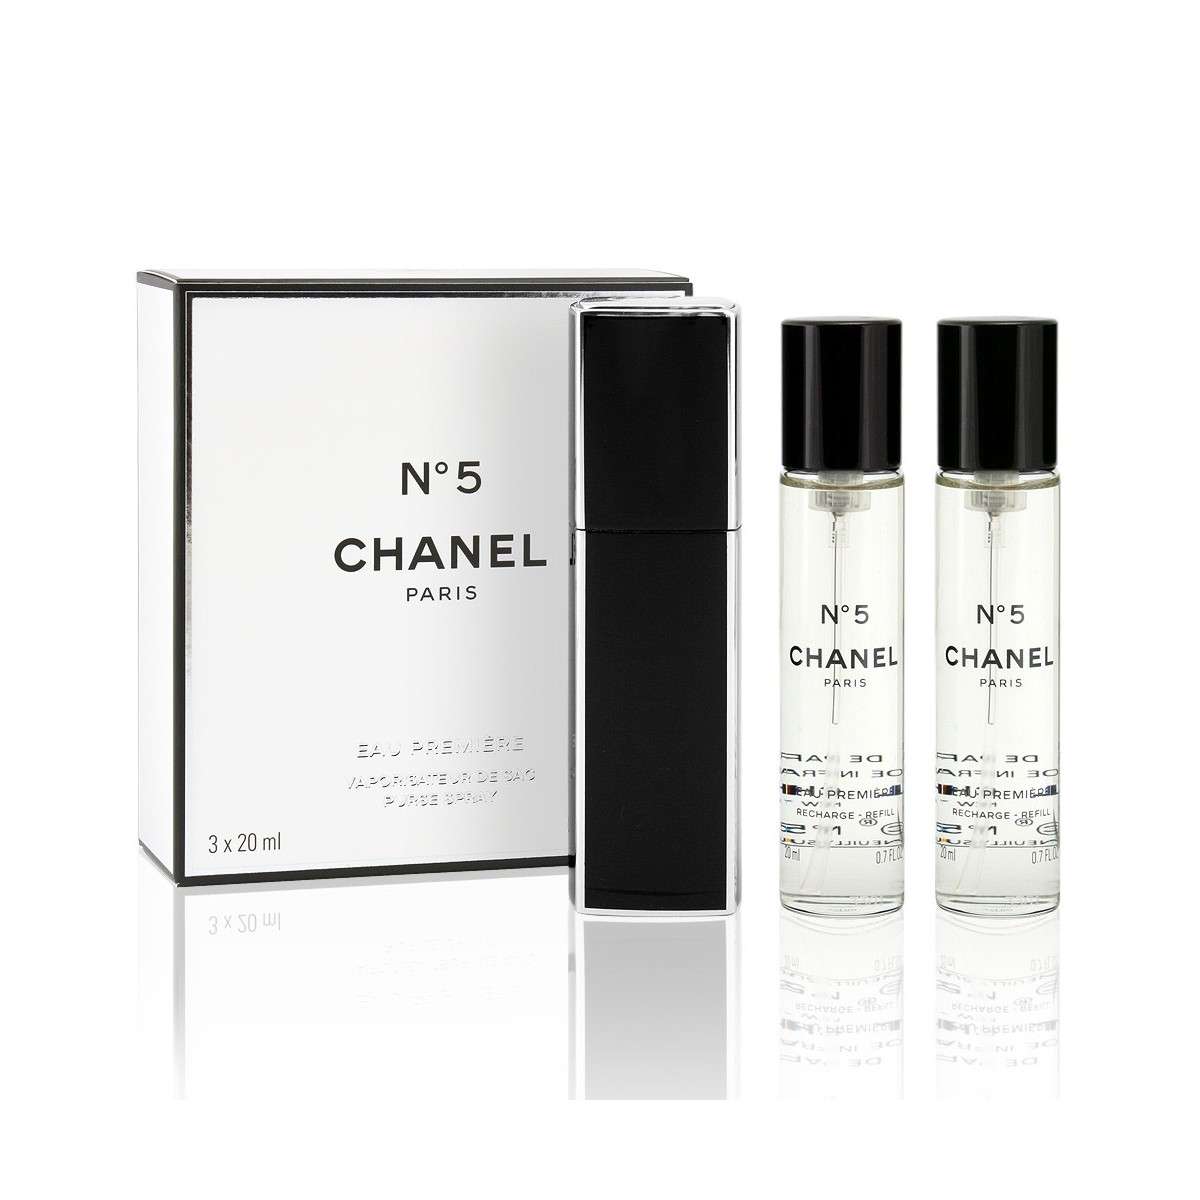 Chanel No 5 Eau Premiére Twist & Spray - Portable Luxury Perfume Set